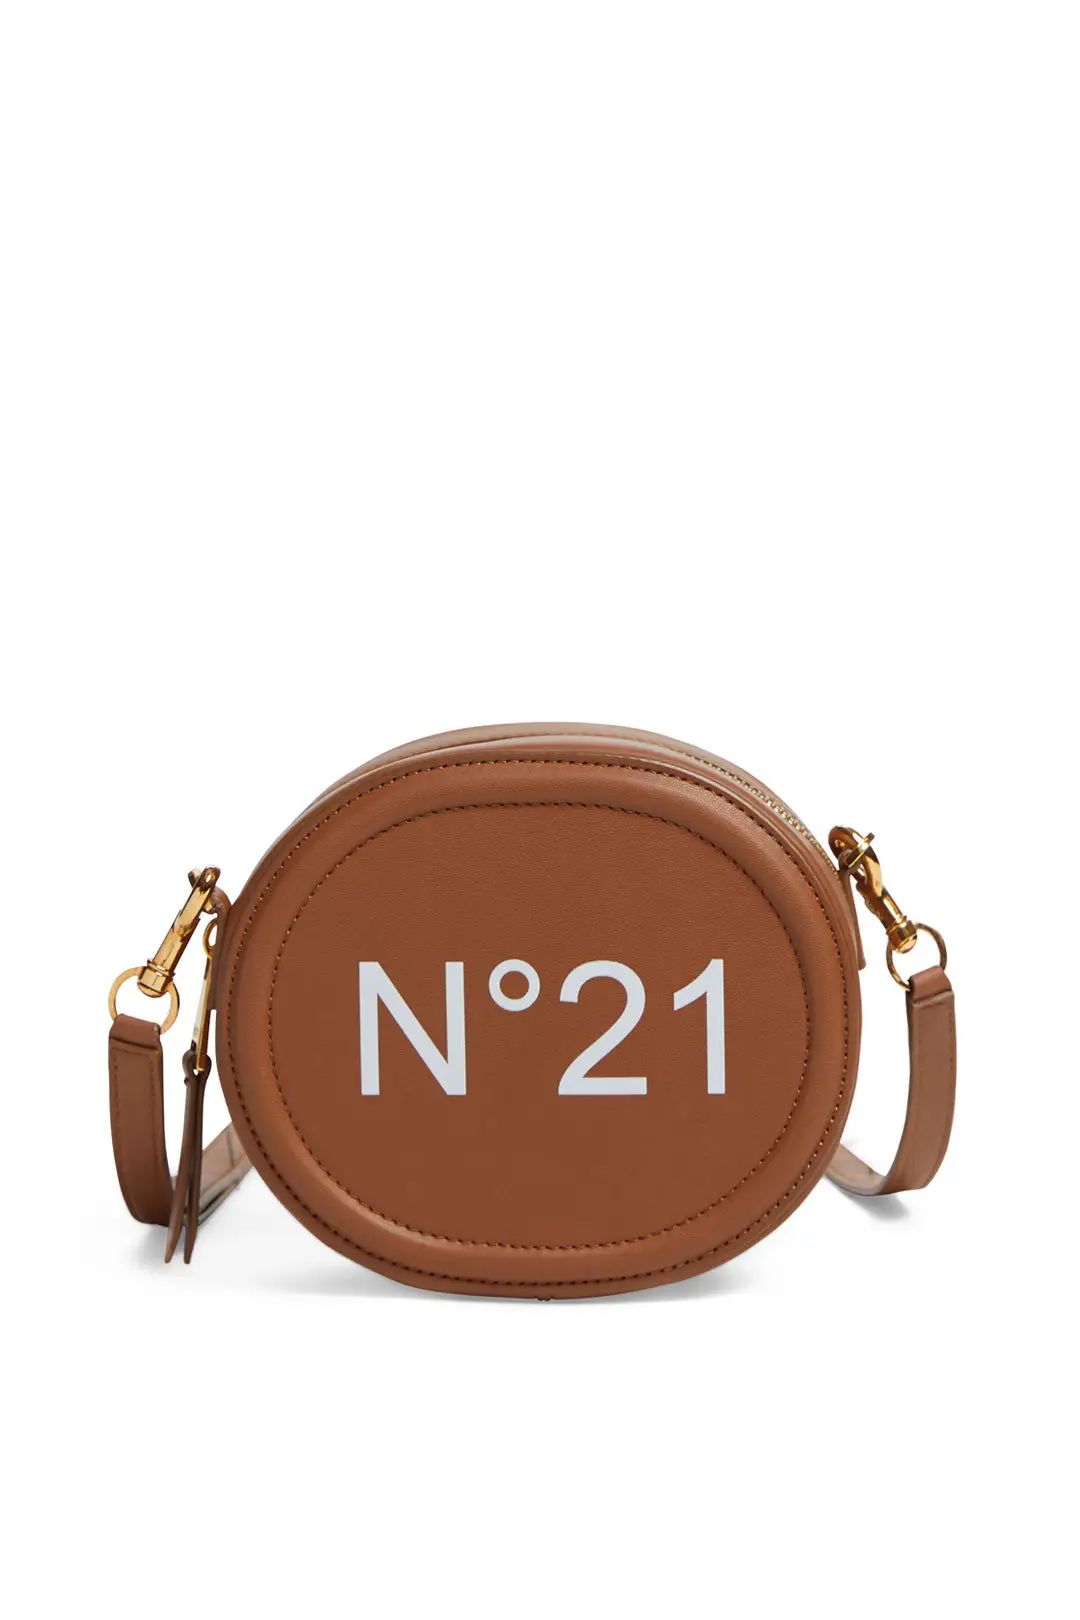 No. 21 Handbags Leather Tamburello Crossbody | Rent the Runway